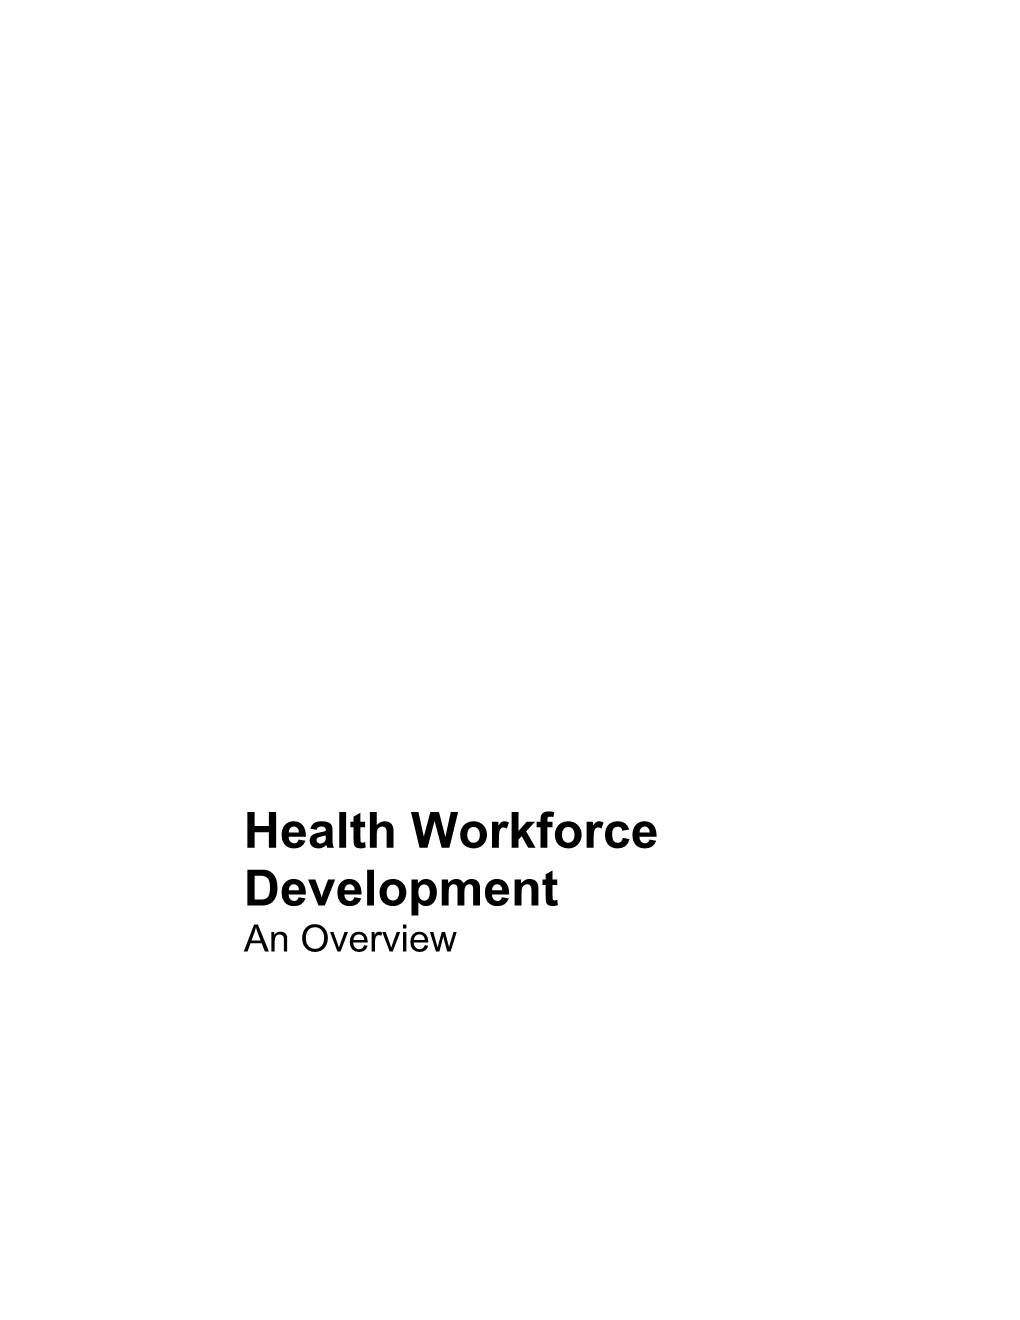 Health Workforce Development: an Overview Iii Contents